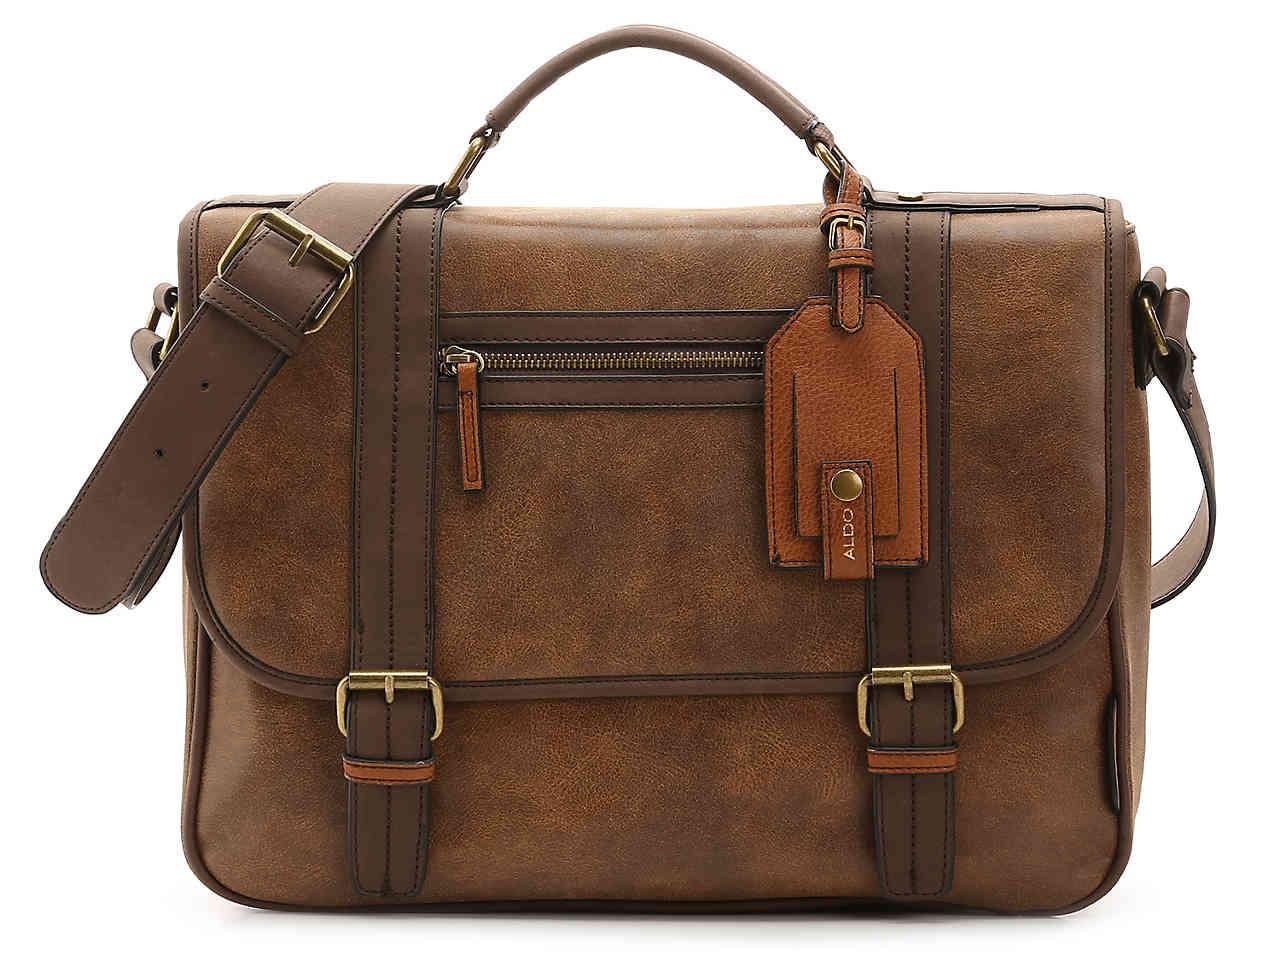 ALDO Unelan Buckle Messenger Bag in Brown for Men - Lyst